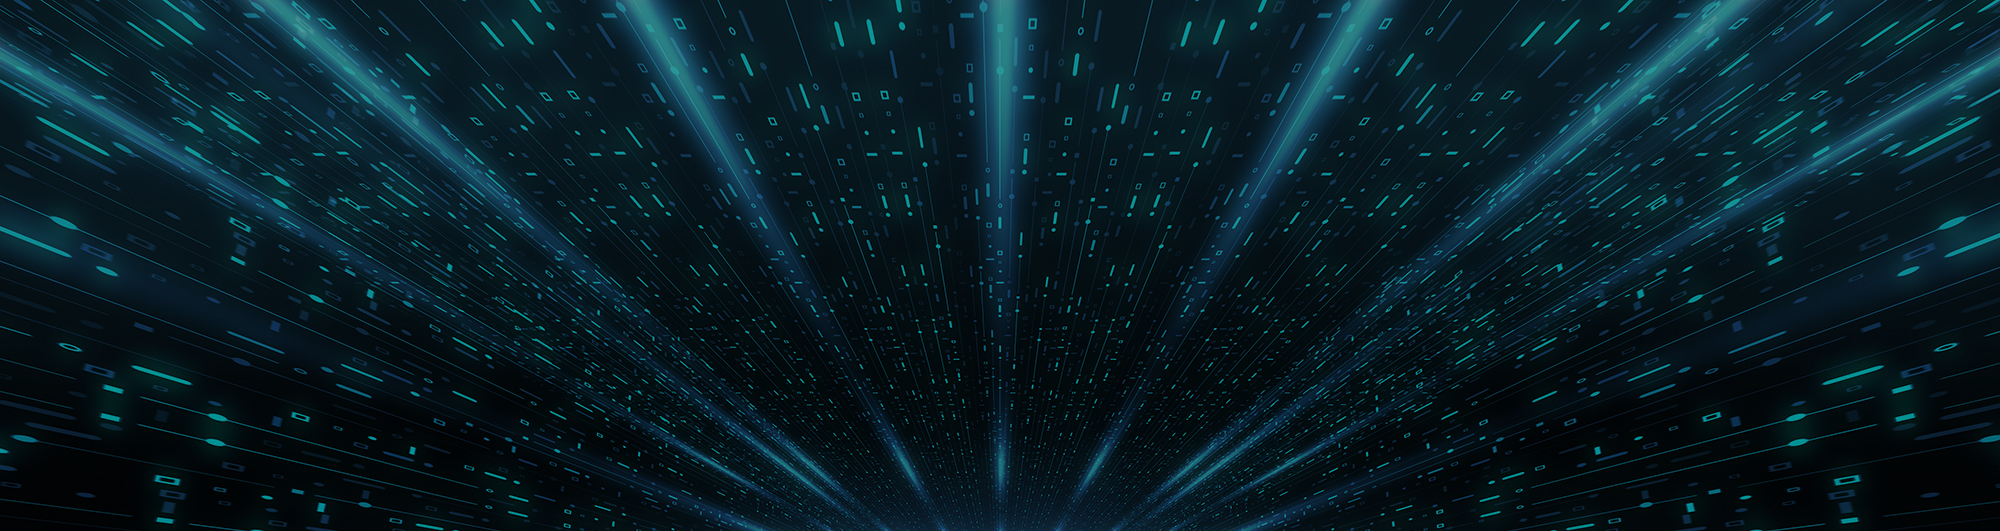 Abstract futuristic sci fi warp tunnel speed light.